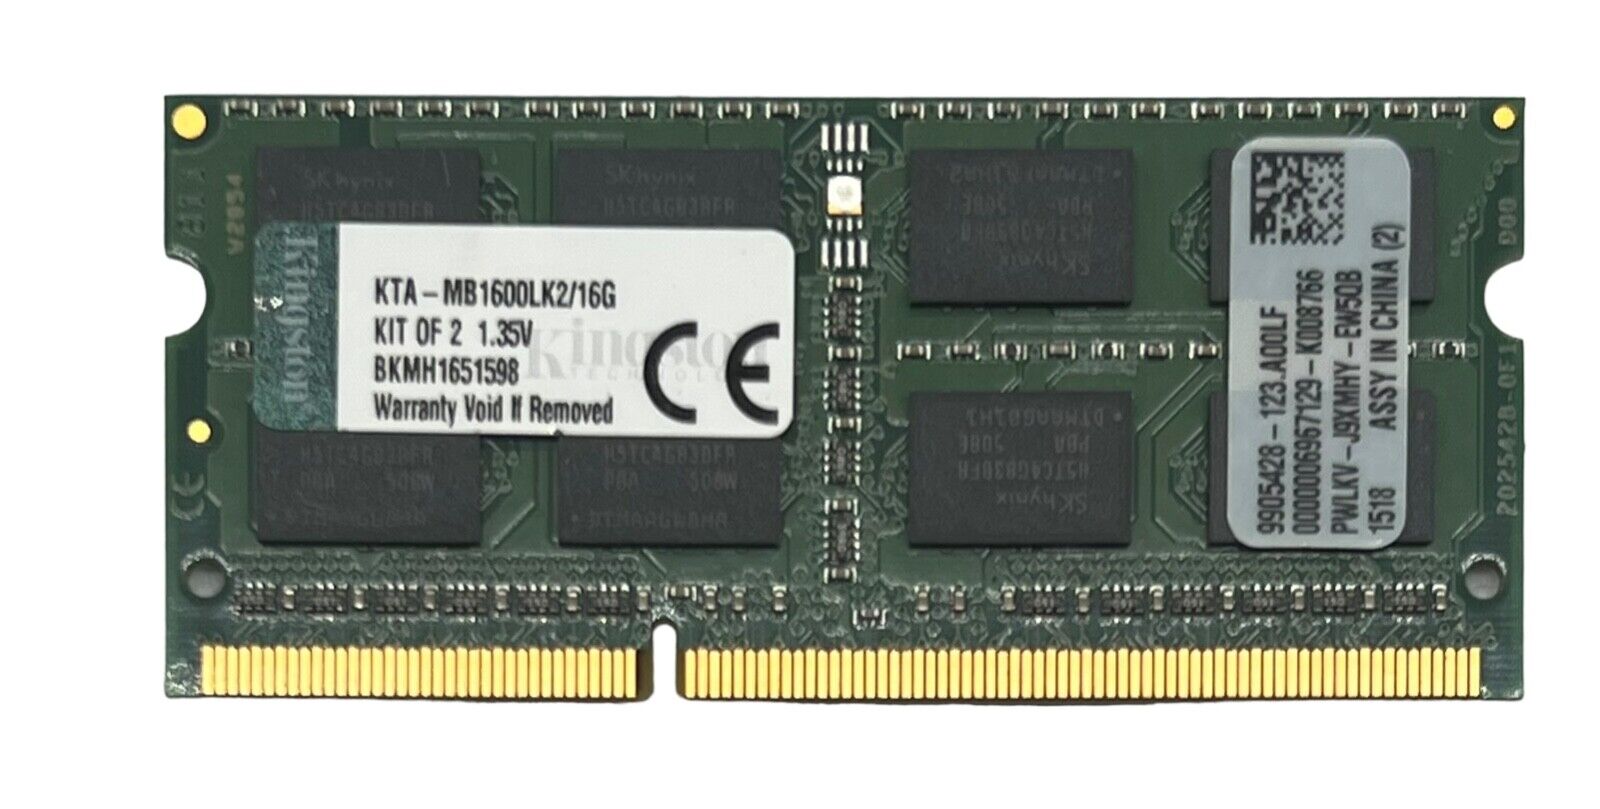 Kingston 8GB (1x8GB) PC3-12800 DDR3-1600 Laptop Memory SDRAM KTA-MB1600LK2/16G